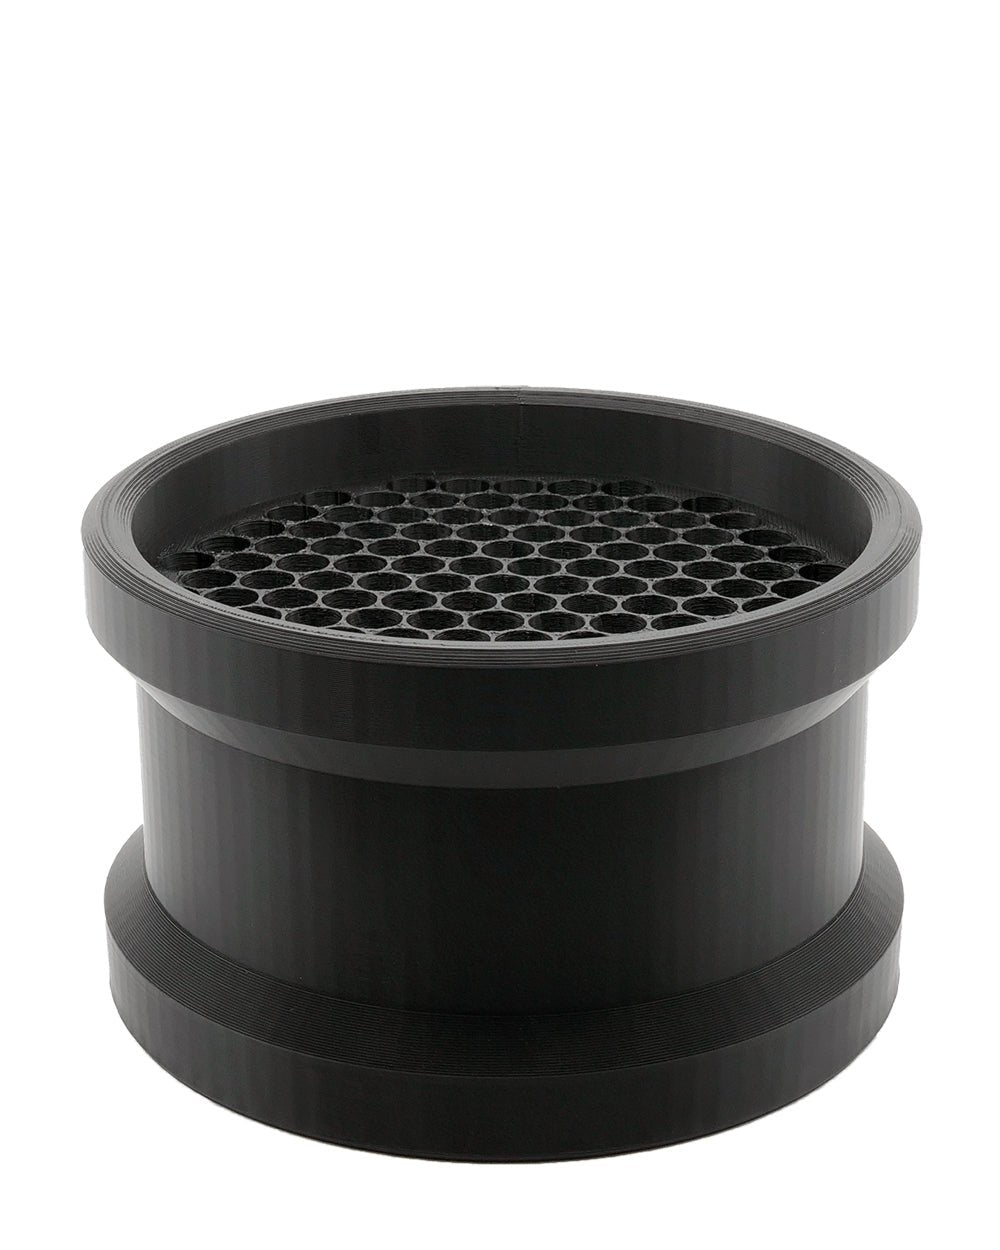 HUMBOLDT | Black Pre-Rolled Cones Filling Machine Cartridge 84mm | Fill 121 Cones Per Run - 1